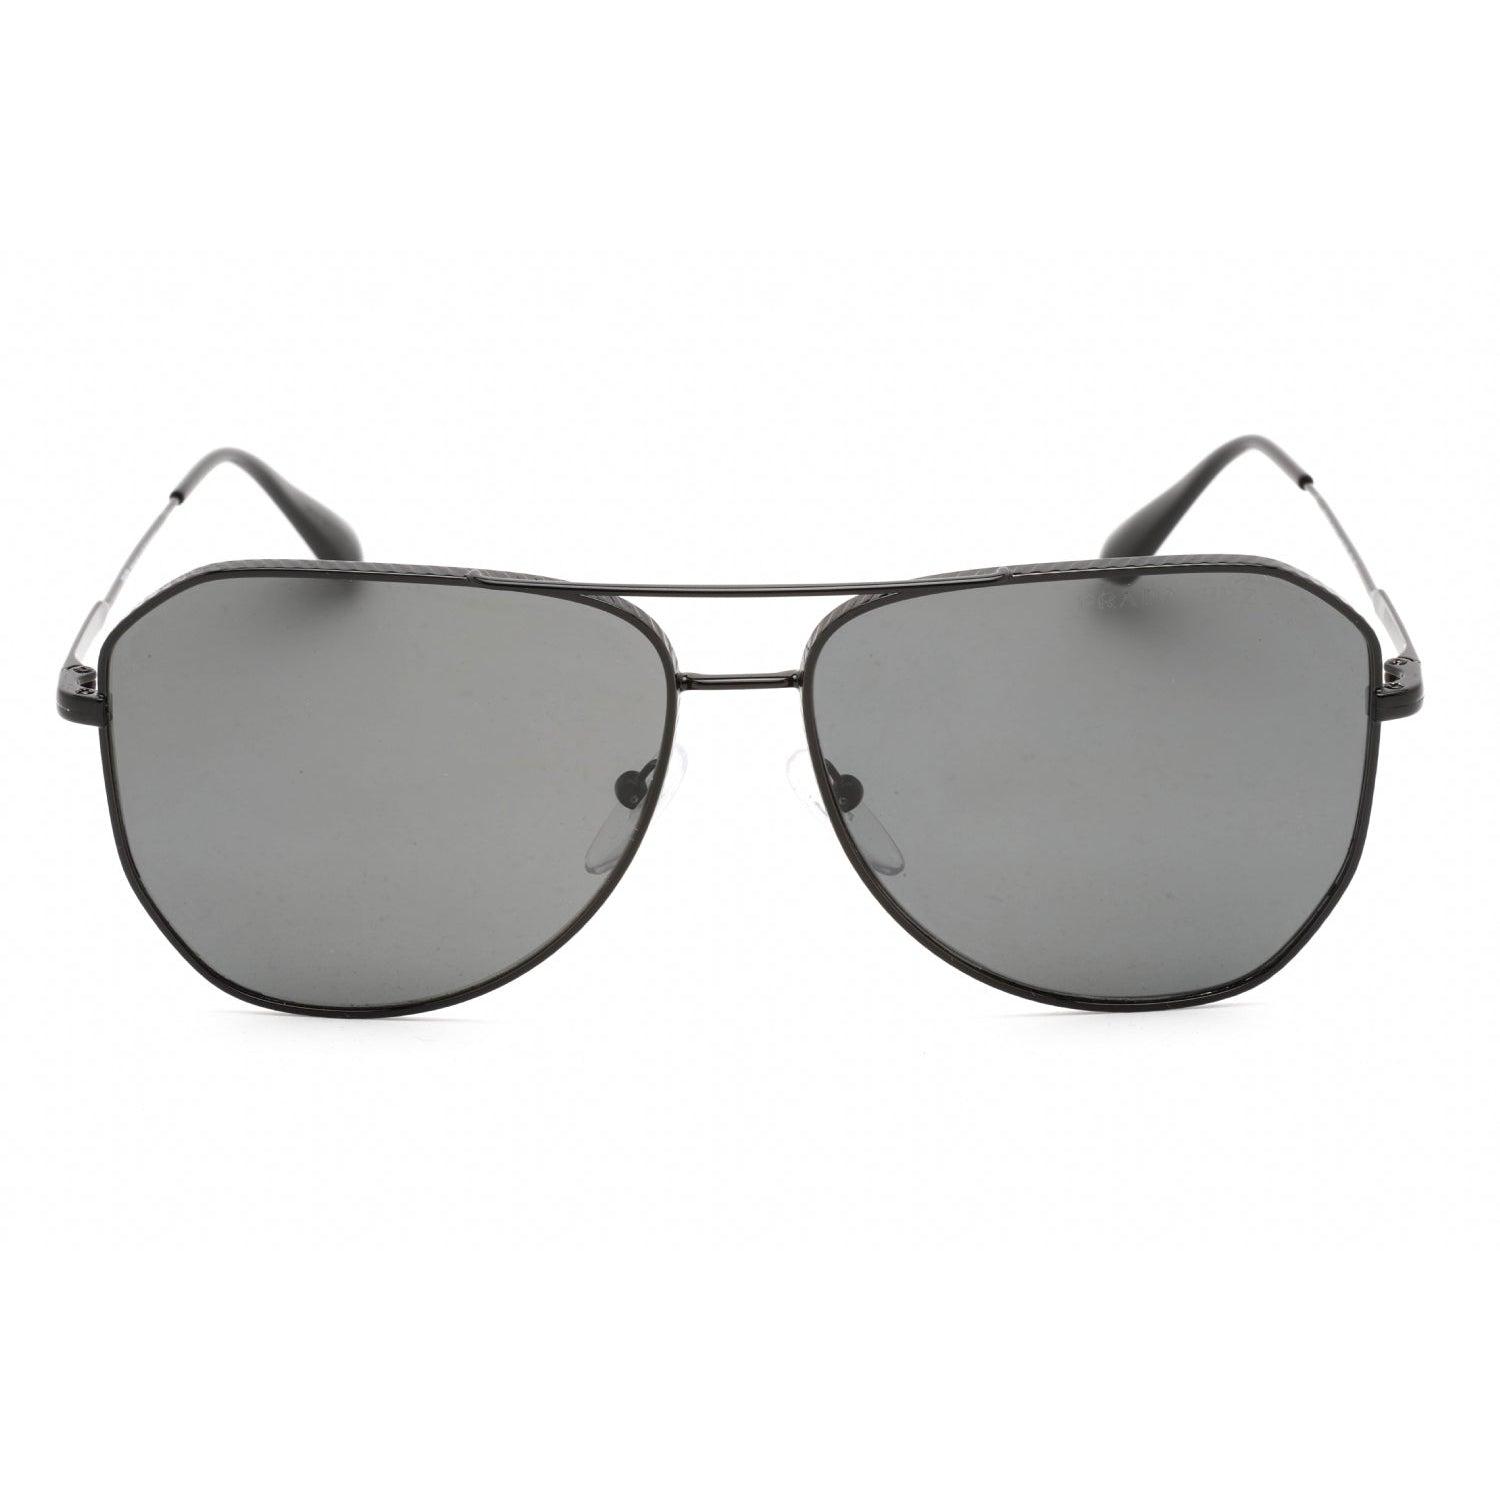 Prada 0pr 10zsf Sunglasses Baltic Marble /dark Grey Polarized in Black